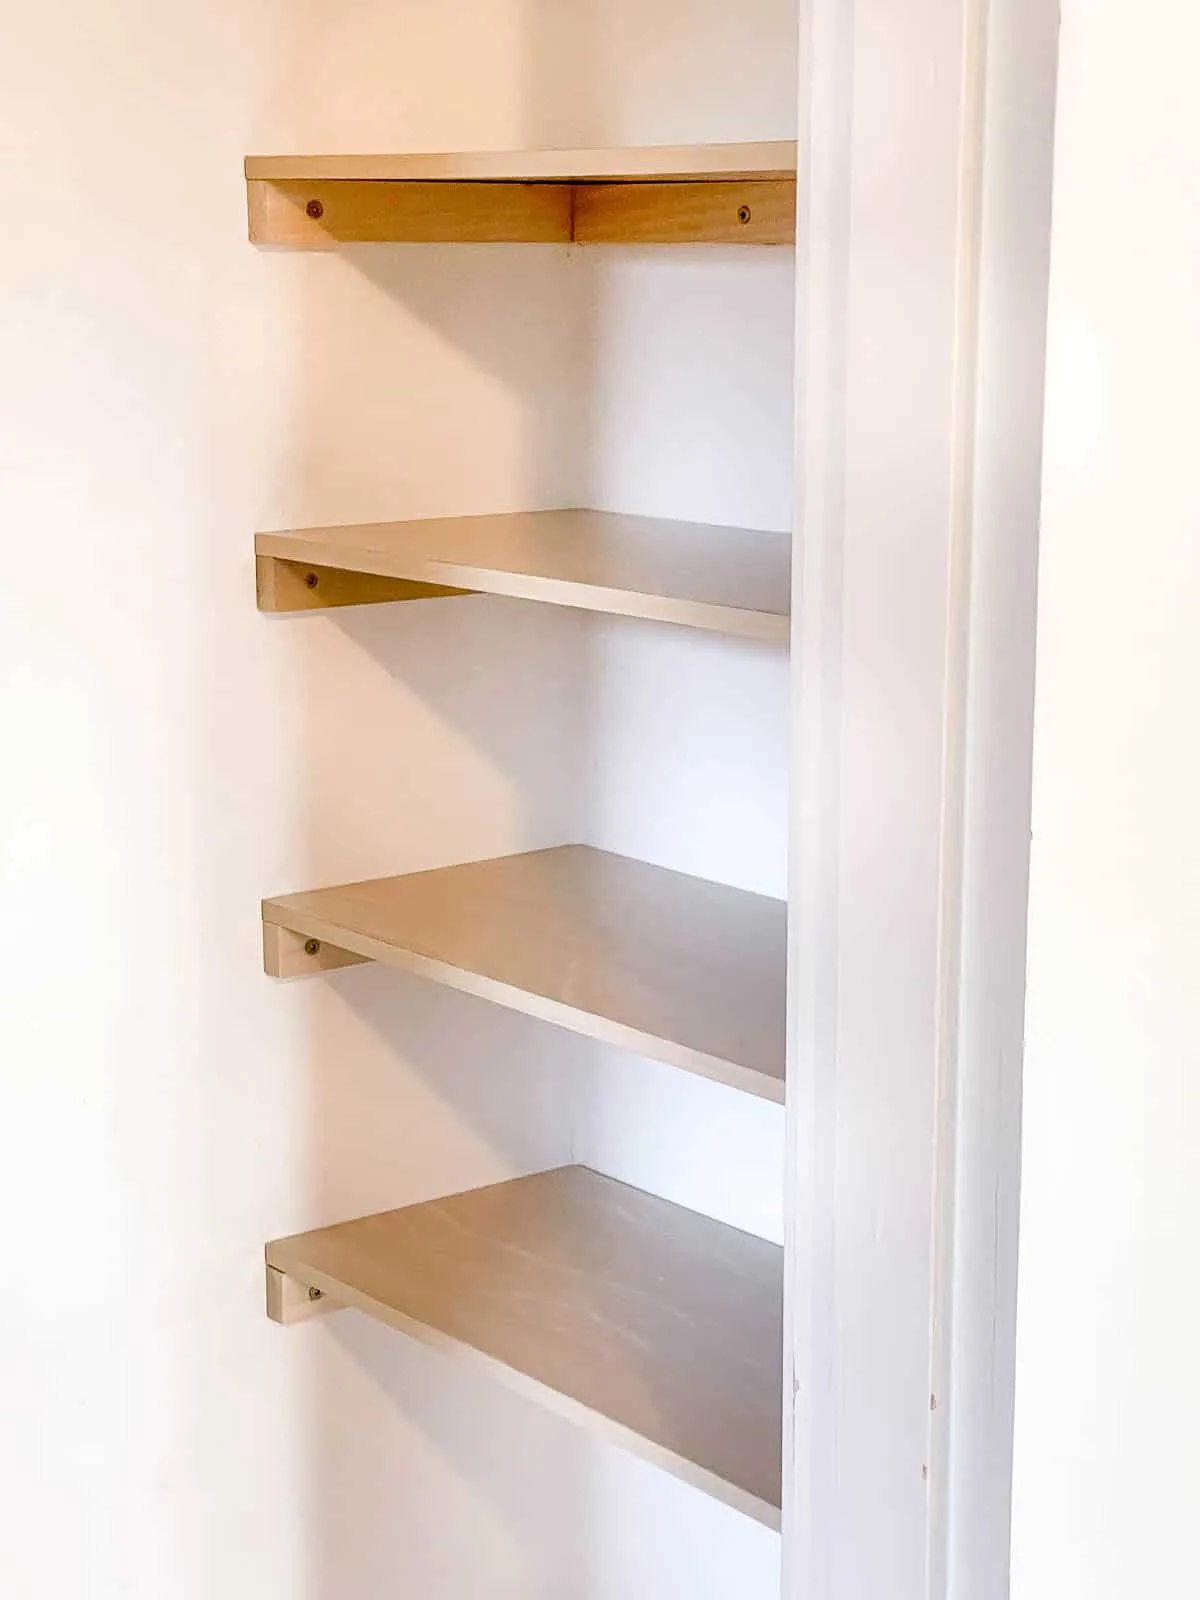 cheap and easy diy closet shelves - the handyman's daughter